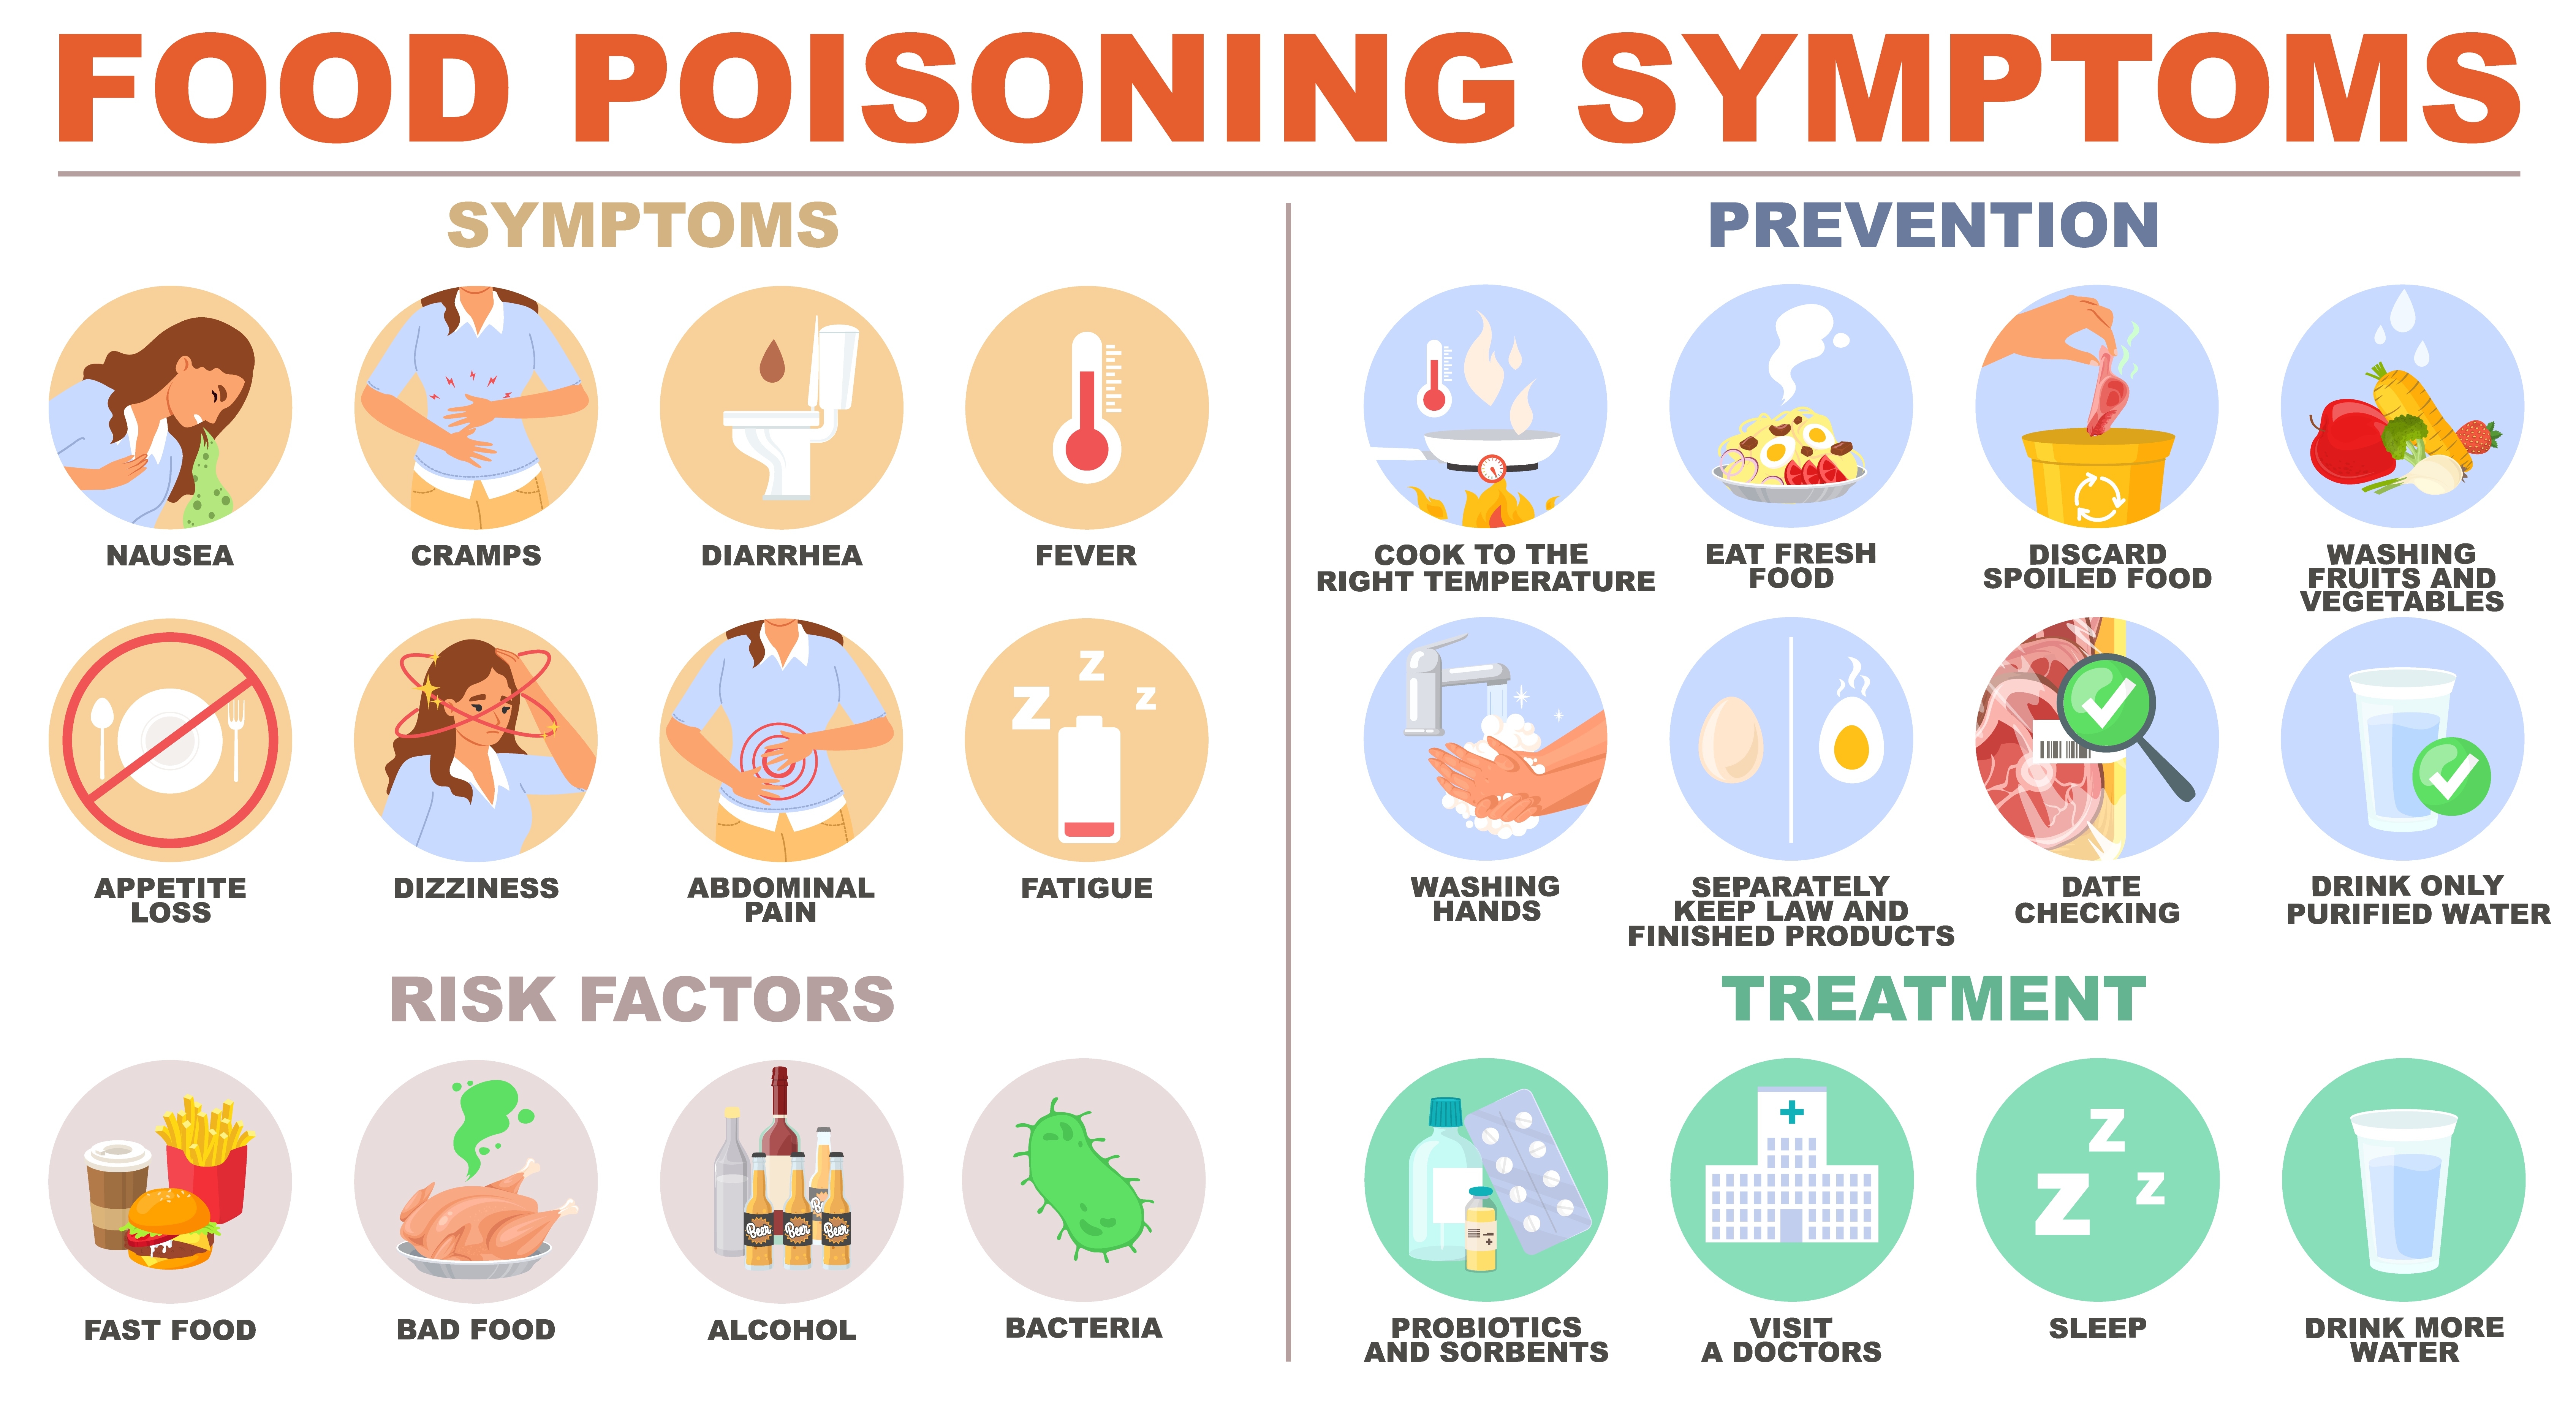 Food Poisoning Symptoms & Prevention - Treatment @ MDIMC